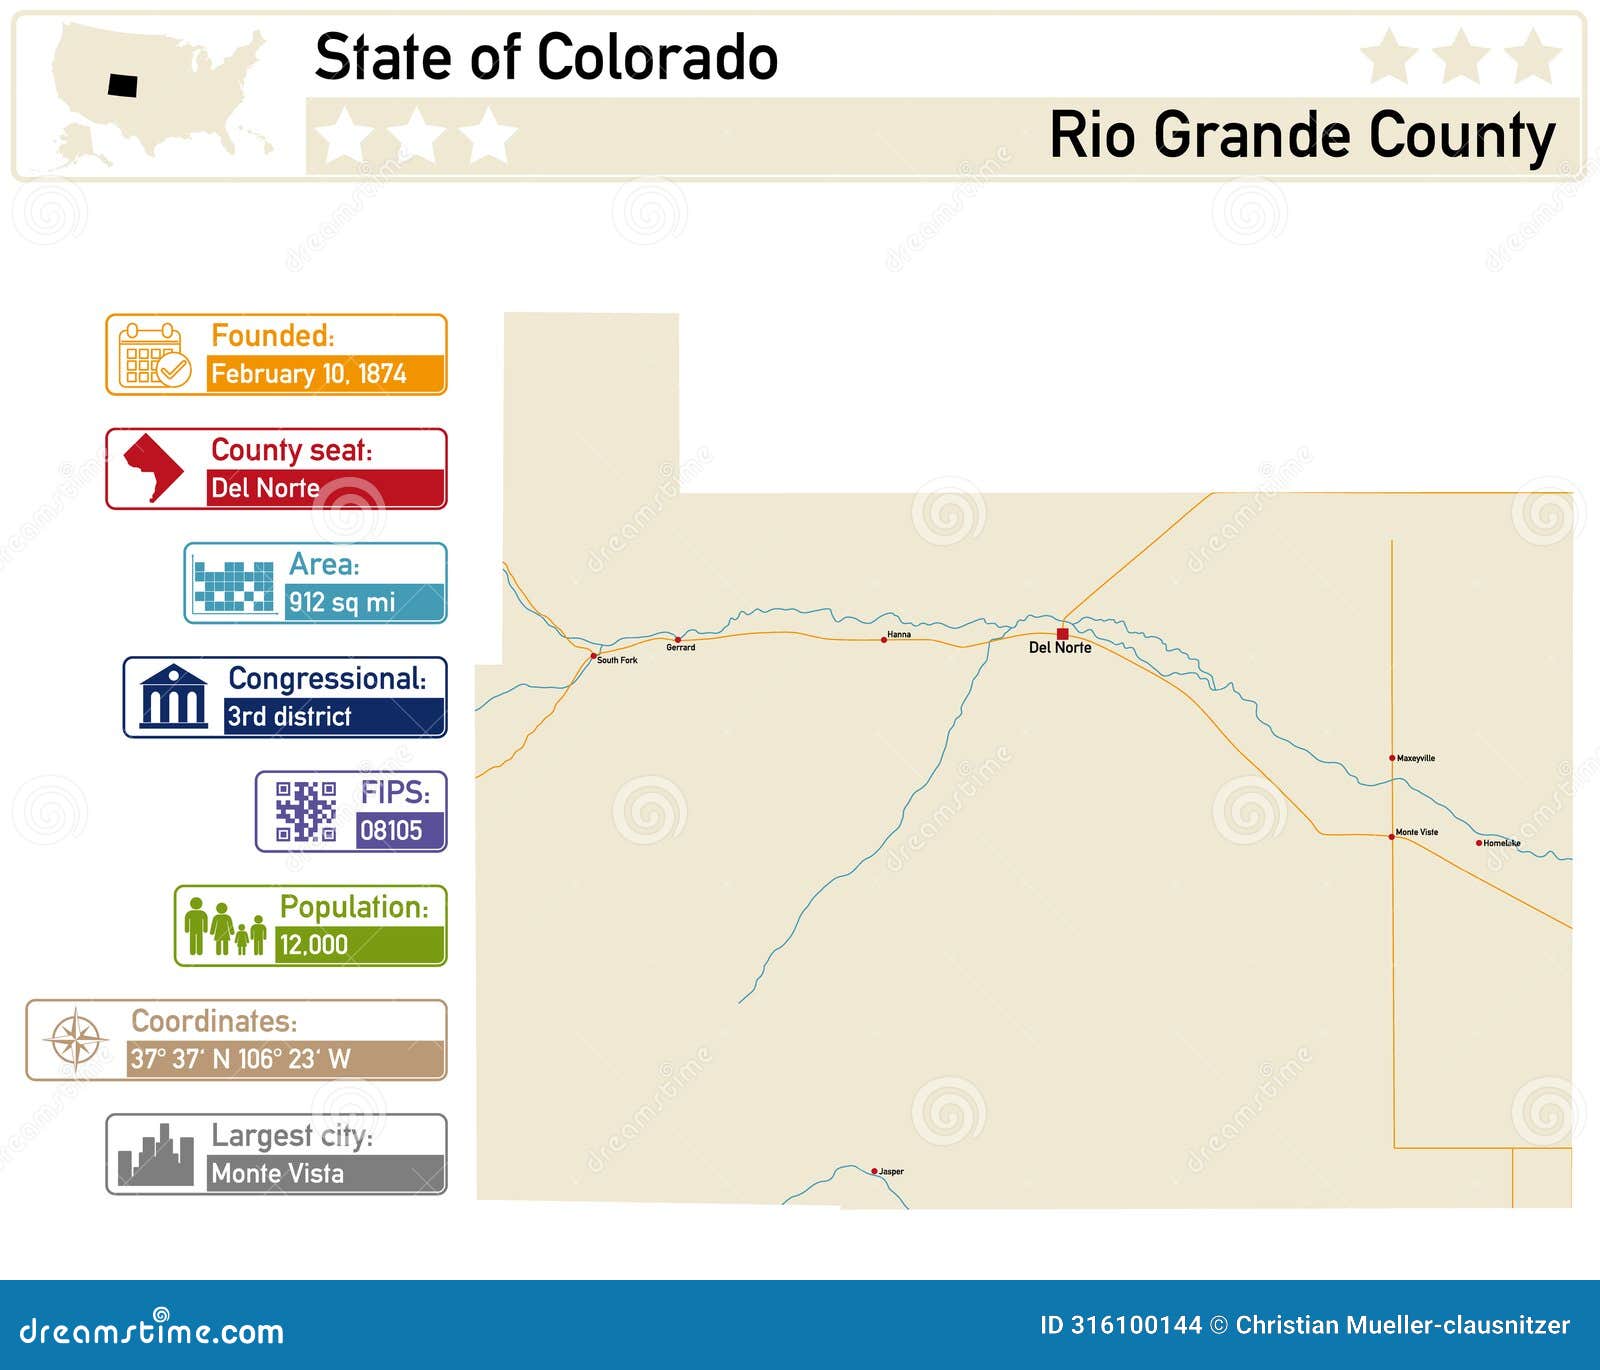 map of rio grande county in colorado usa